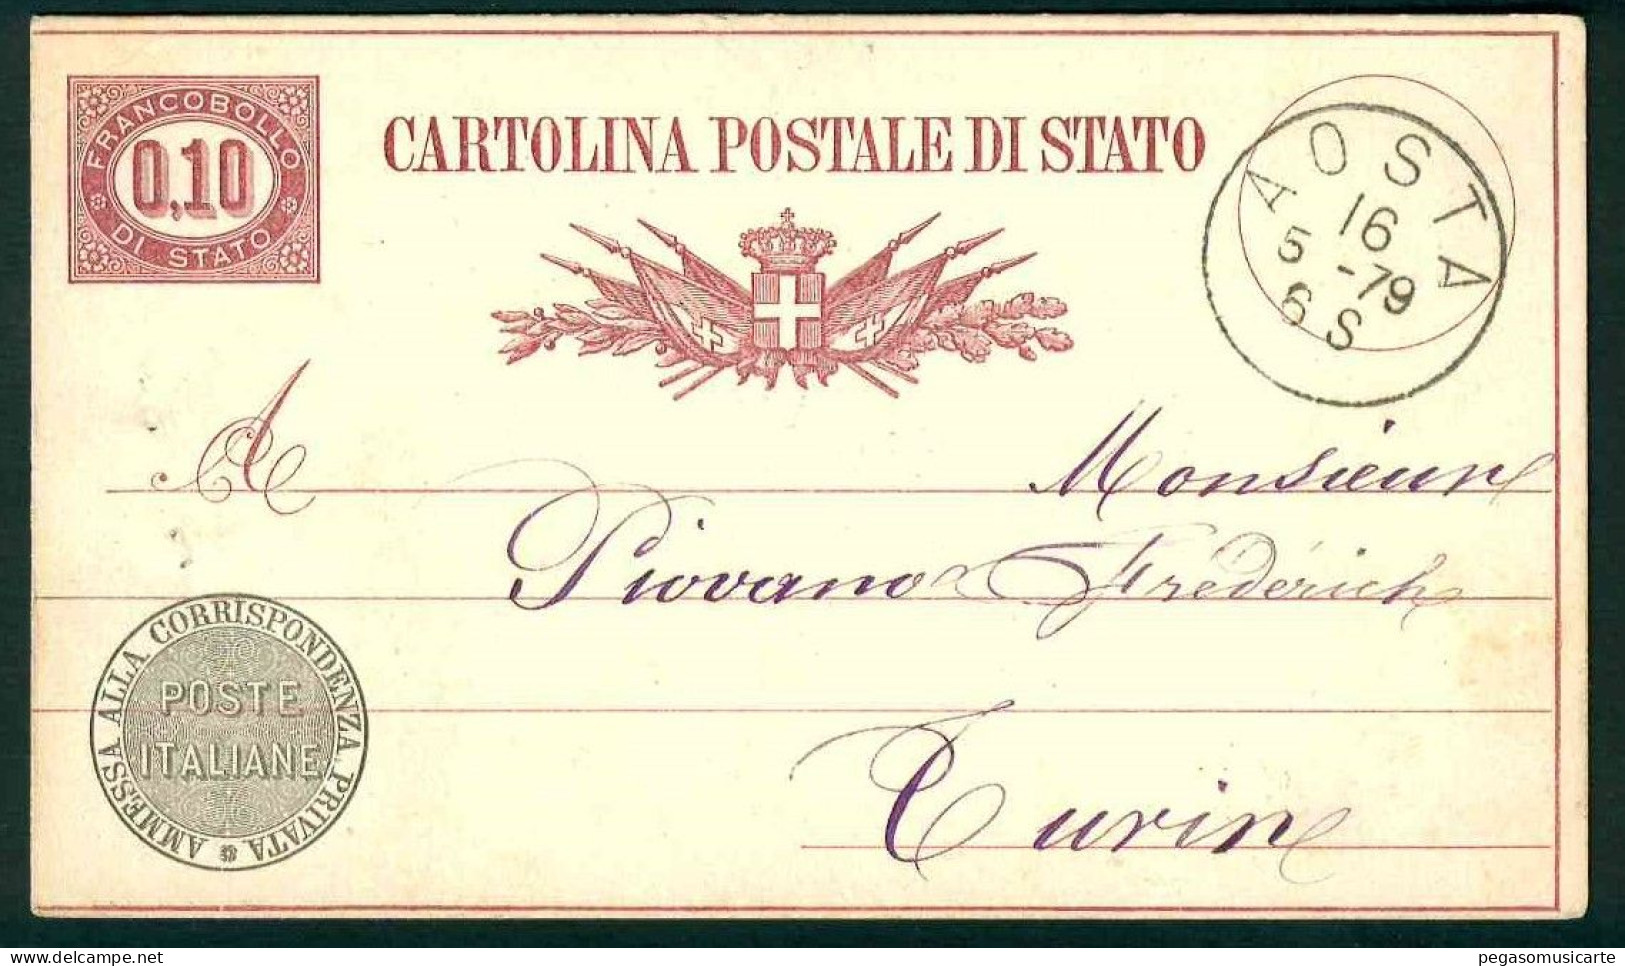 VZ098 - CARTOLINA POSTALE DI STATO CENTESIMI 0,10 - STORIA POSTALE - 1879 AOSTA TORINO - INTERO POSTALE - Entiers Postaux